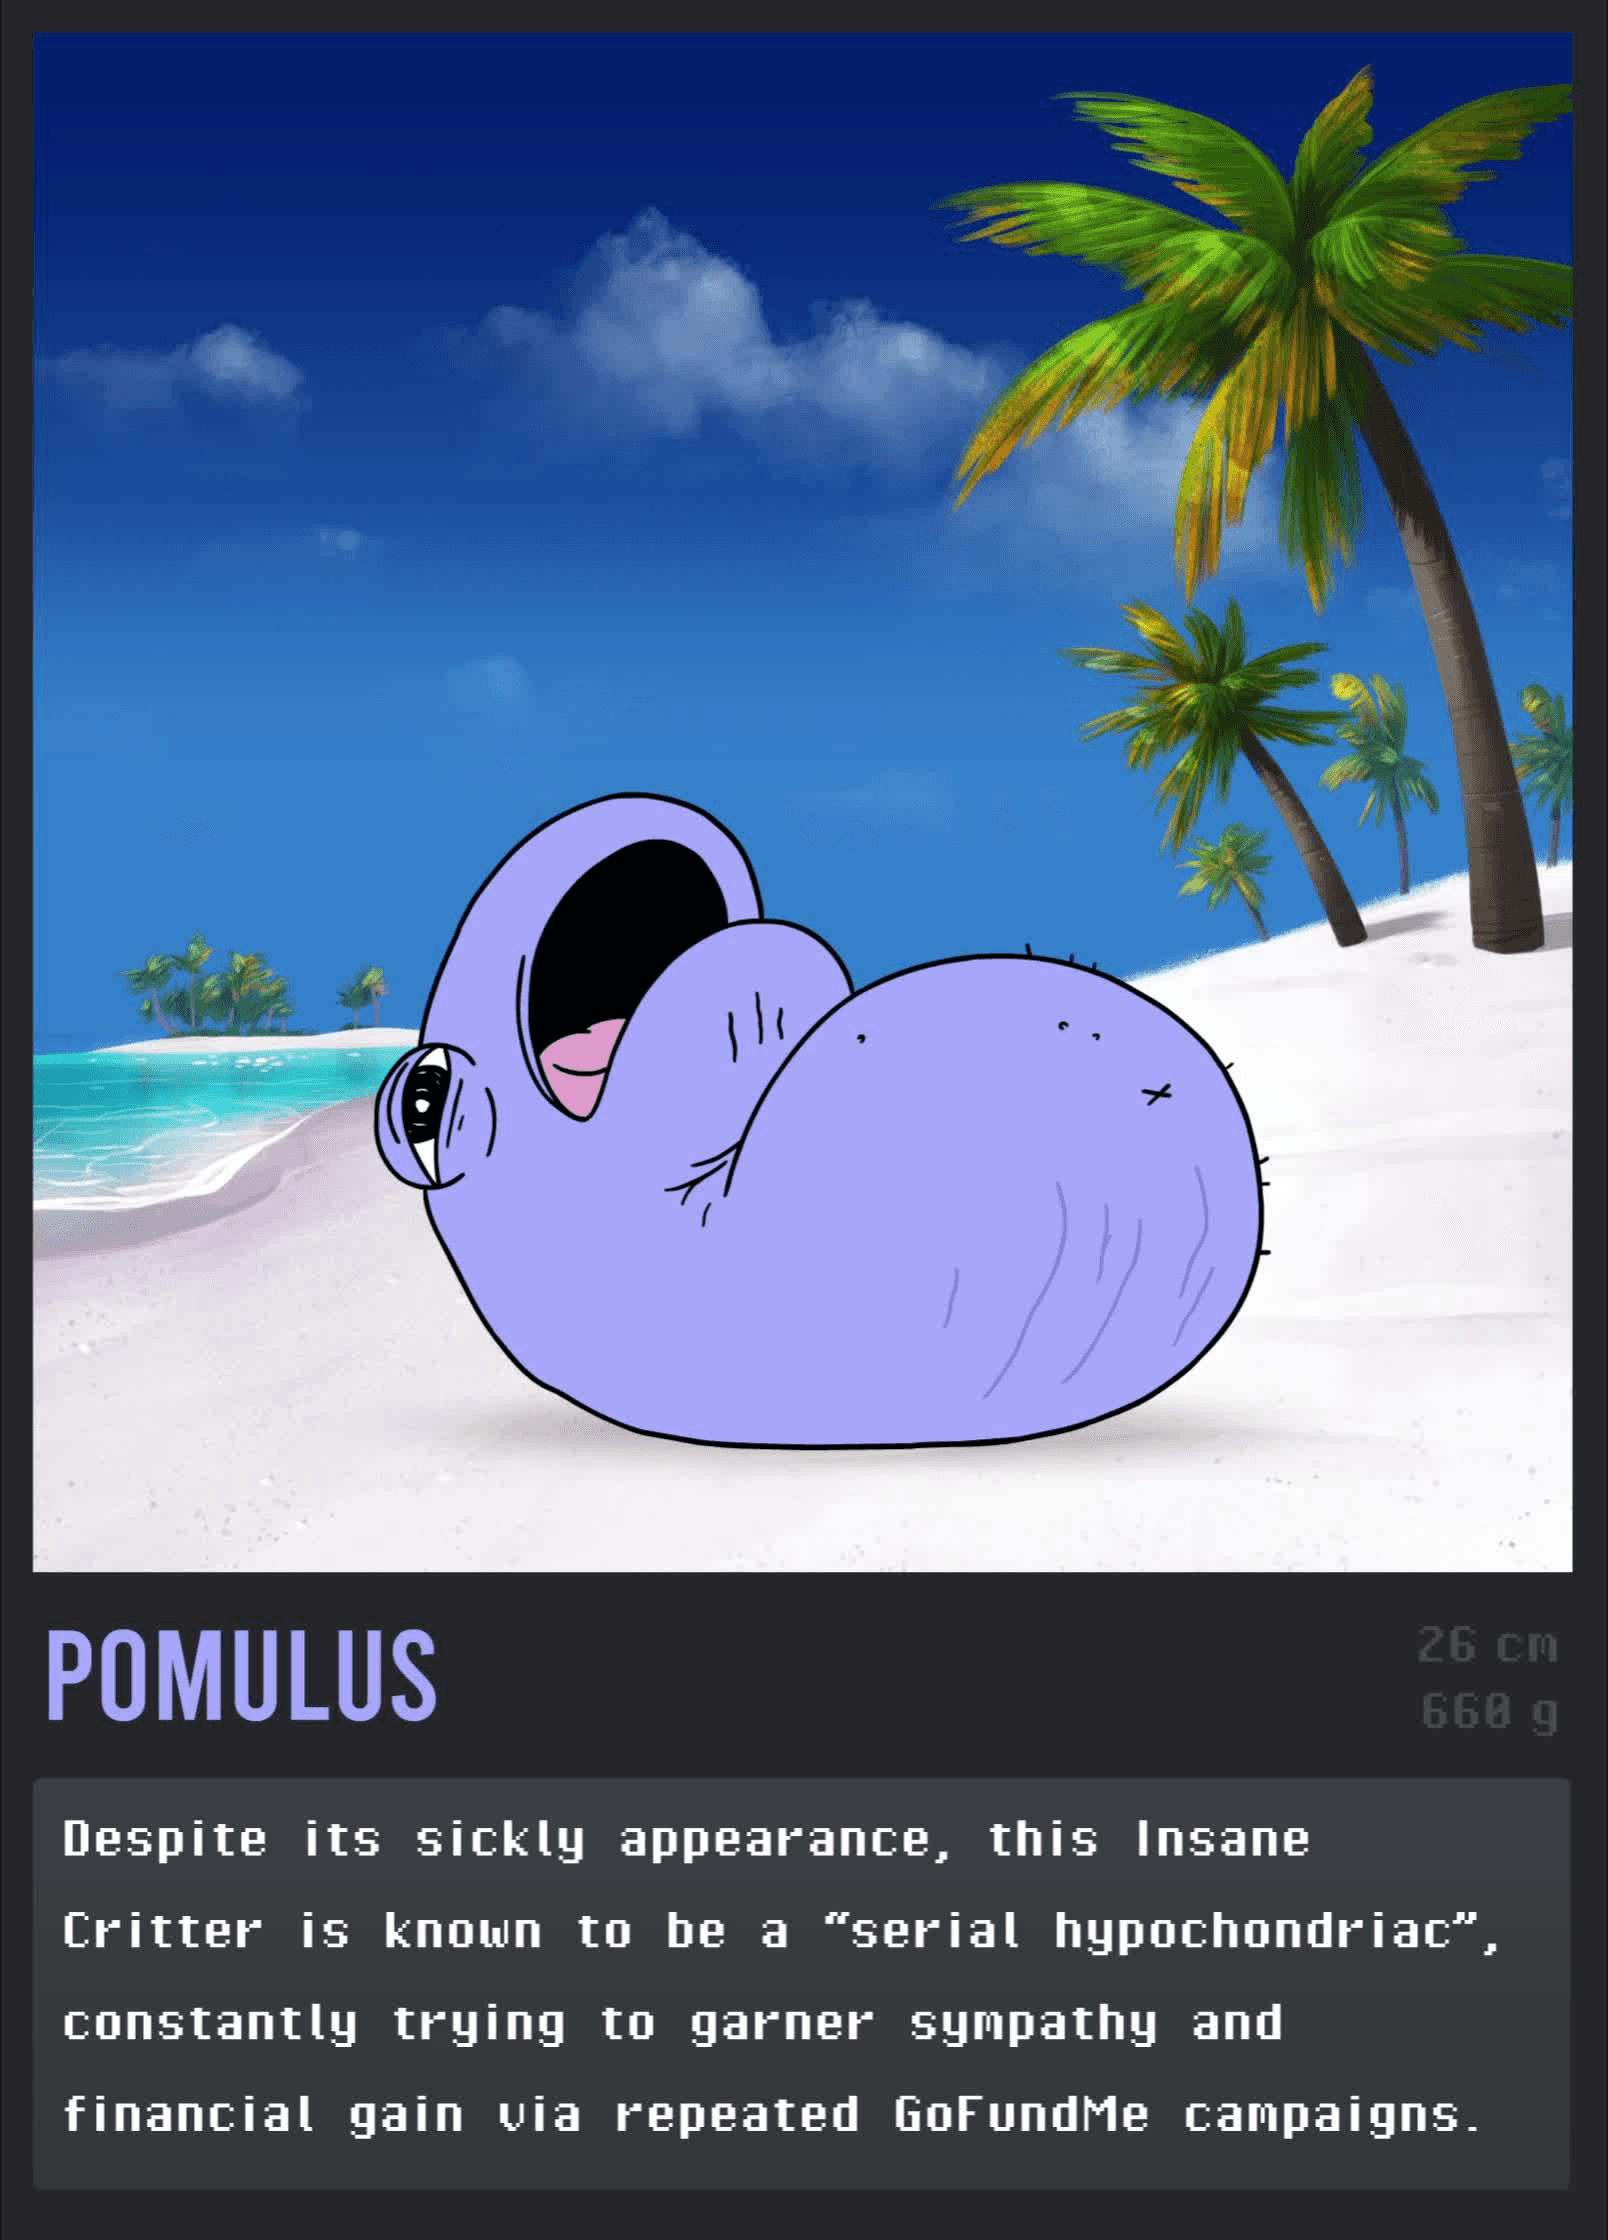 Pomulus